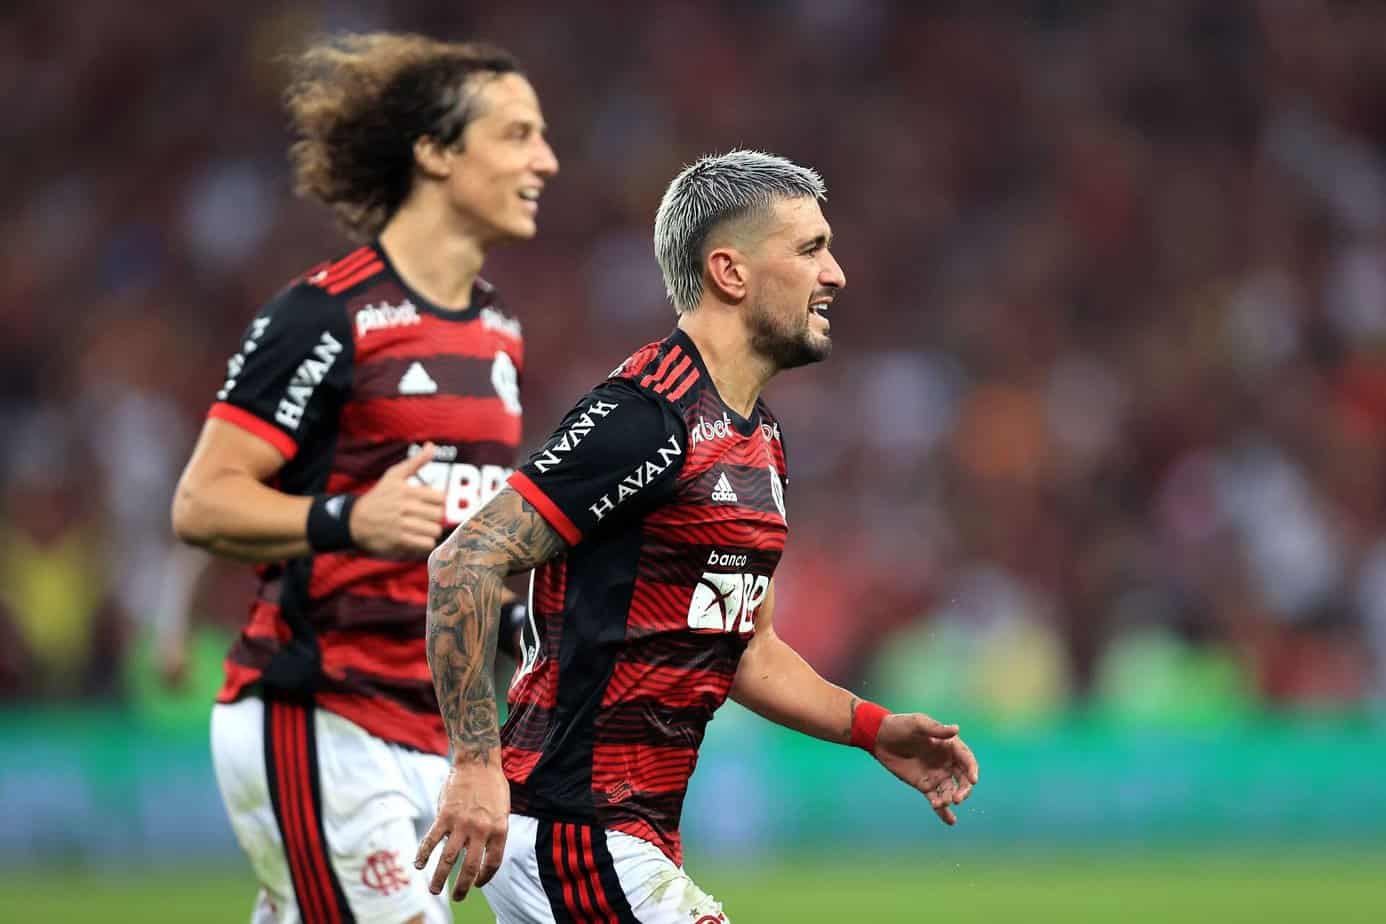 Coritiba vs. Flamengo Betting Odds and Preview